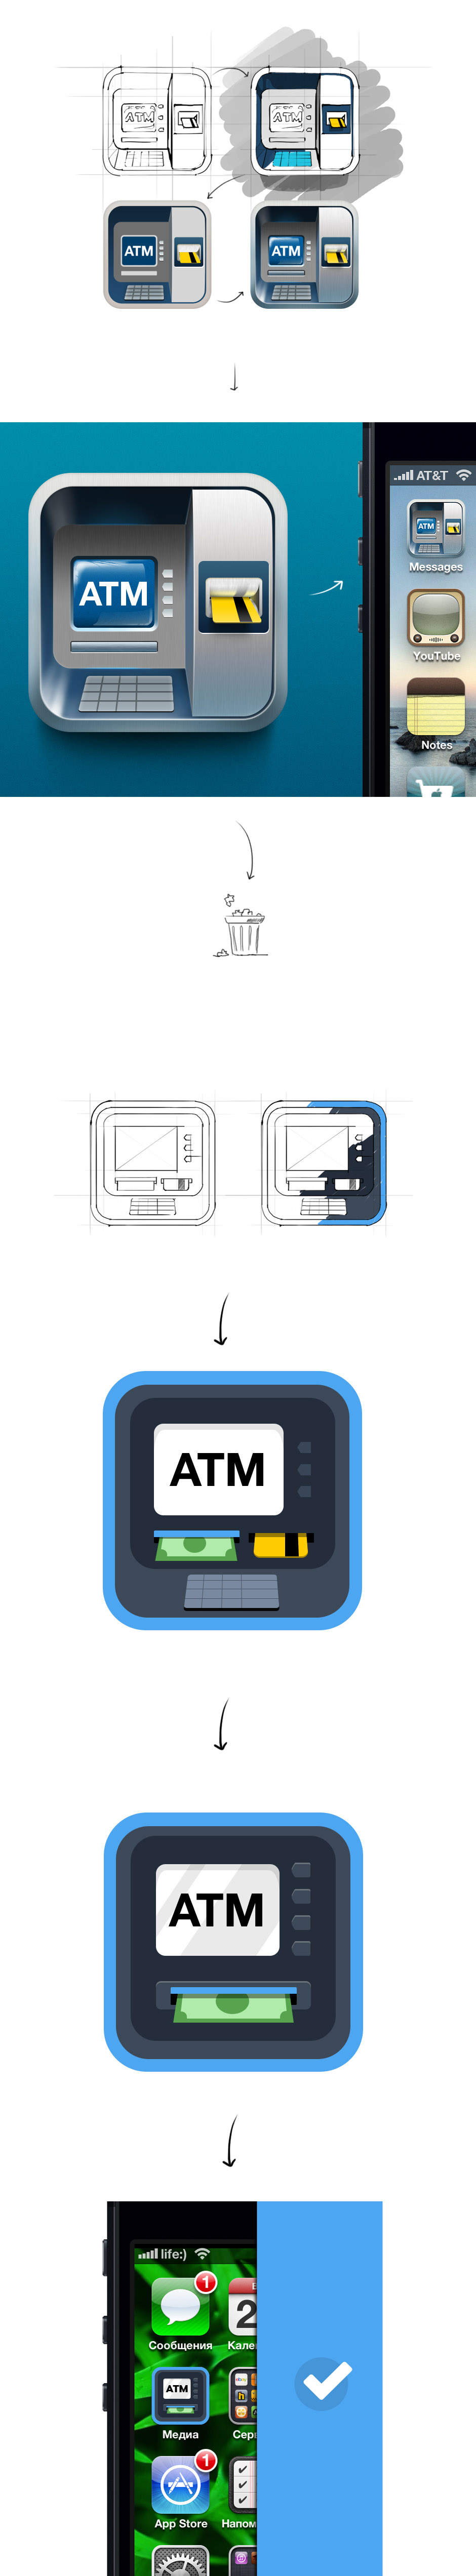 ATM图标设计制作过程